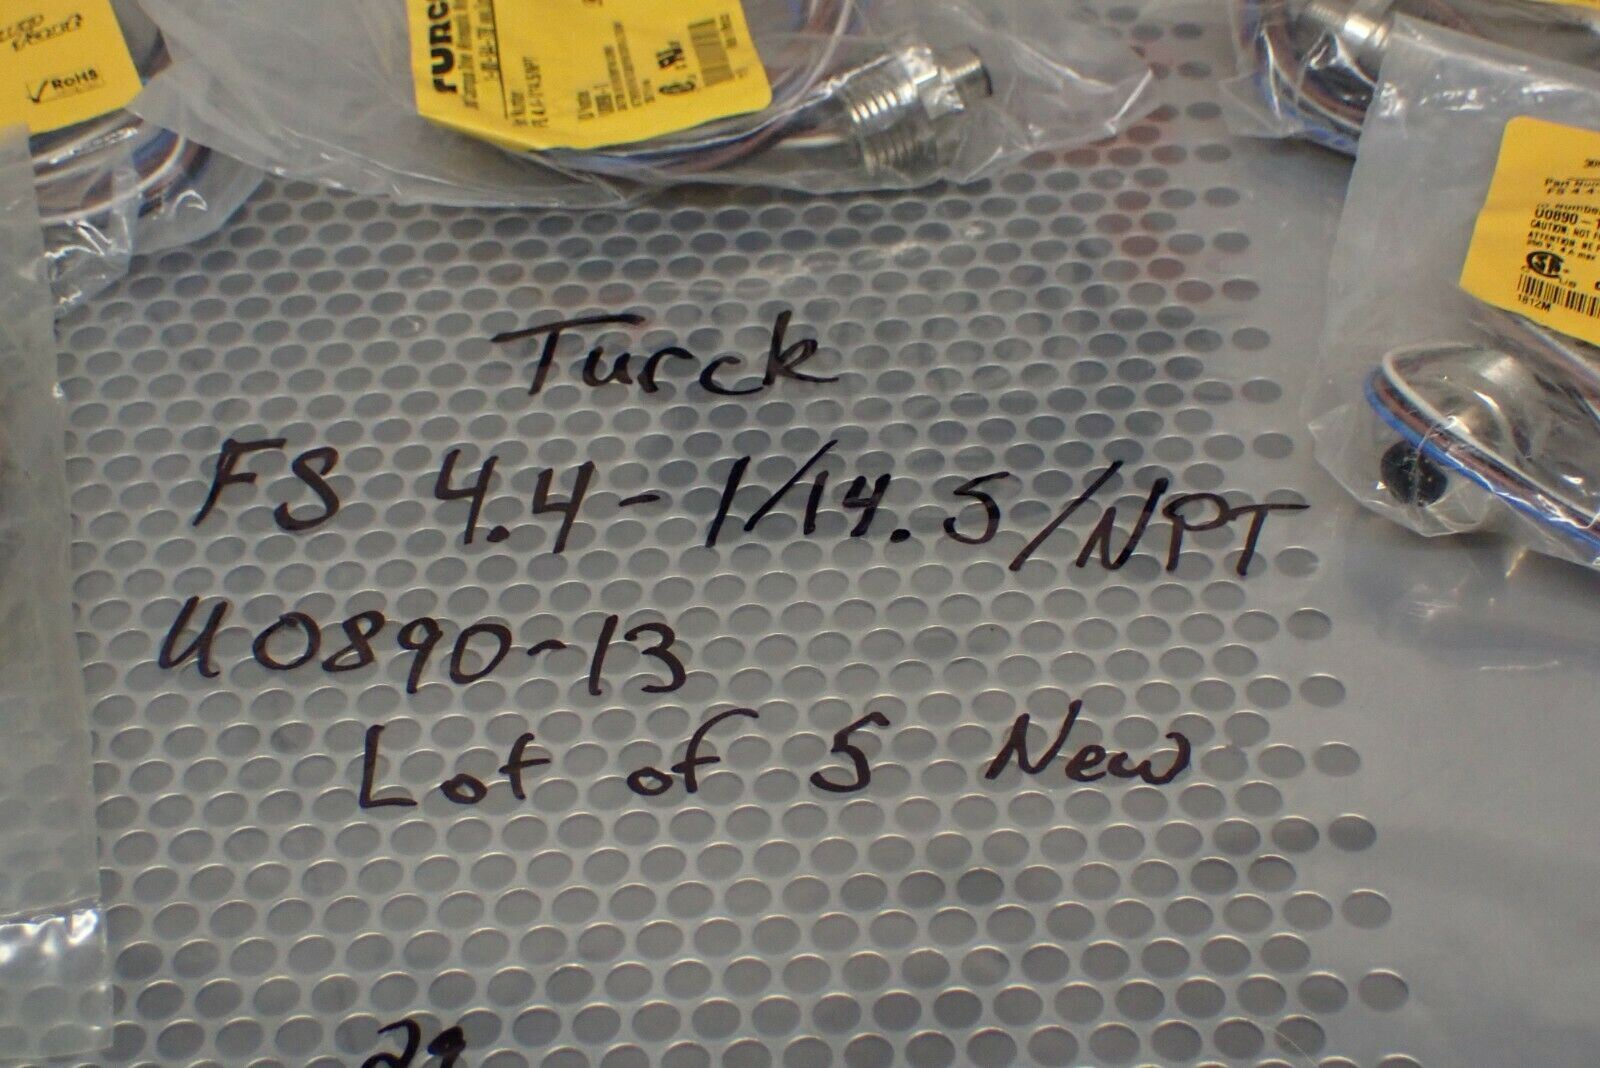 Turck U0890-13 FS 4.4-1/14.5/NPT 4 Pin Male Connector 250V 4Amps